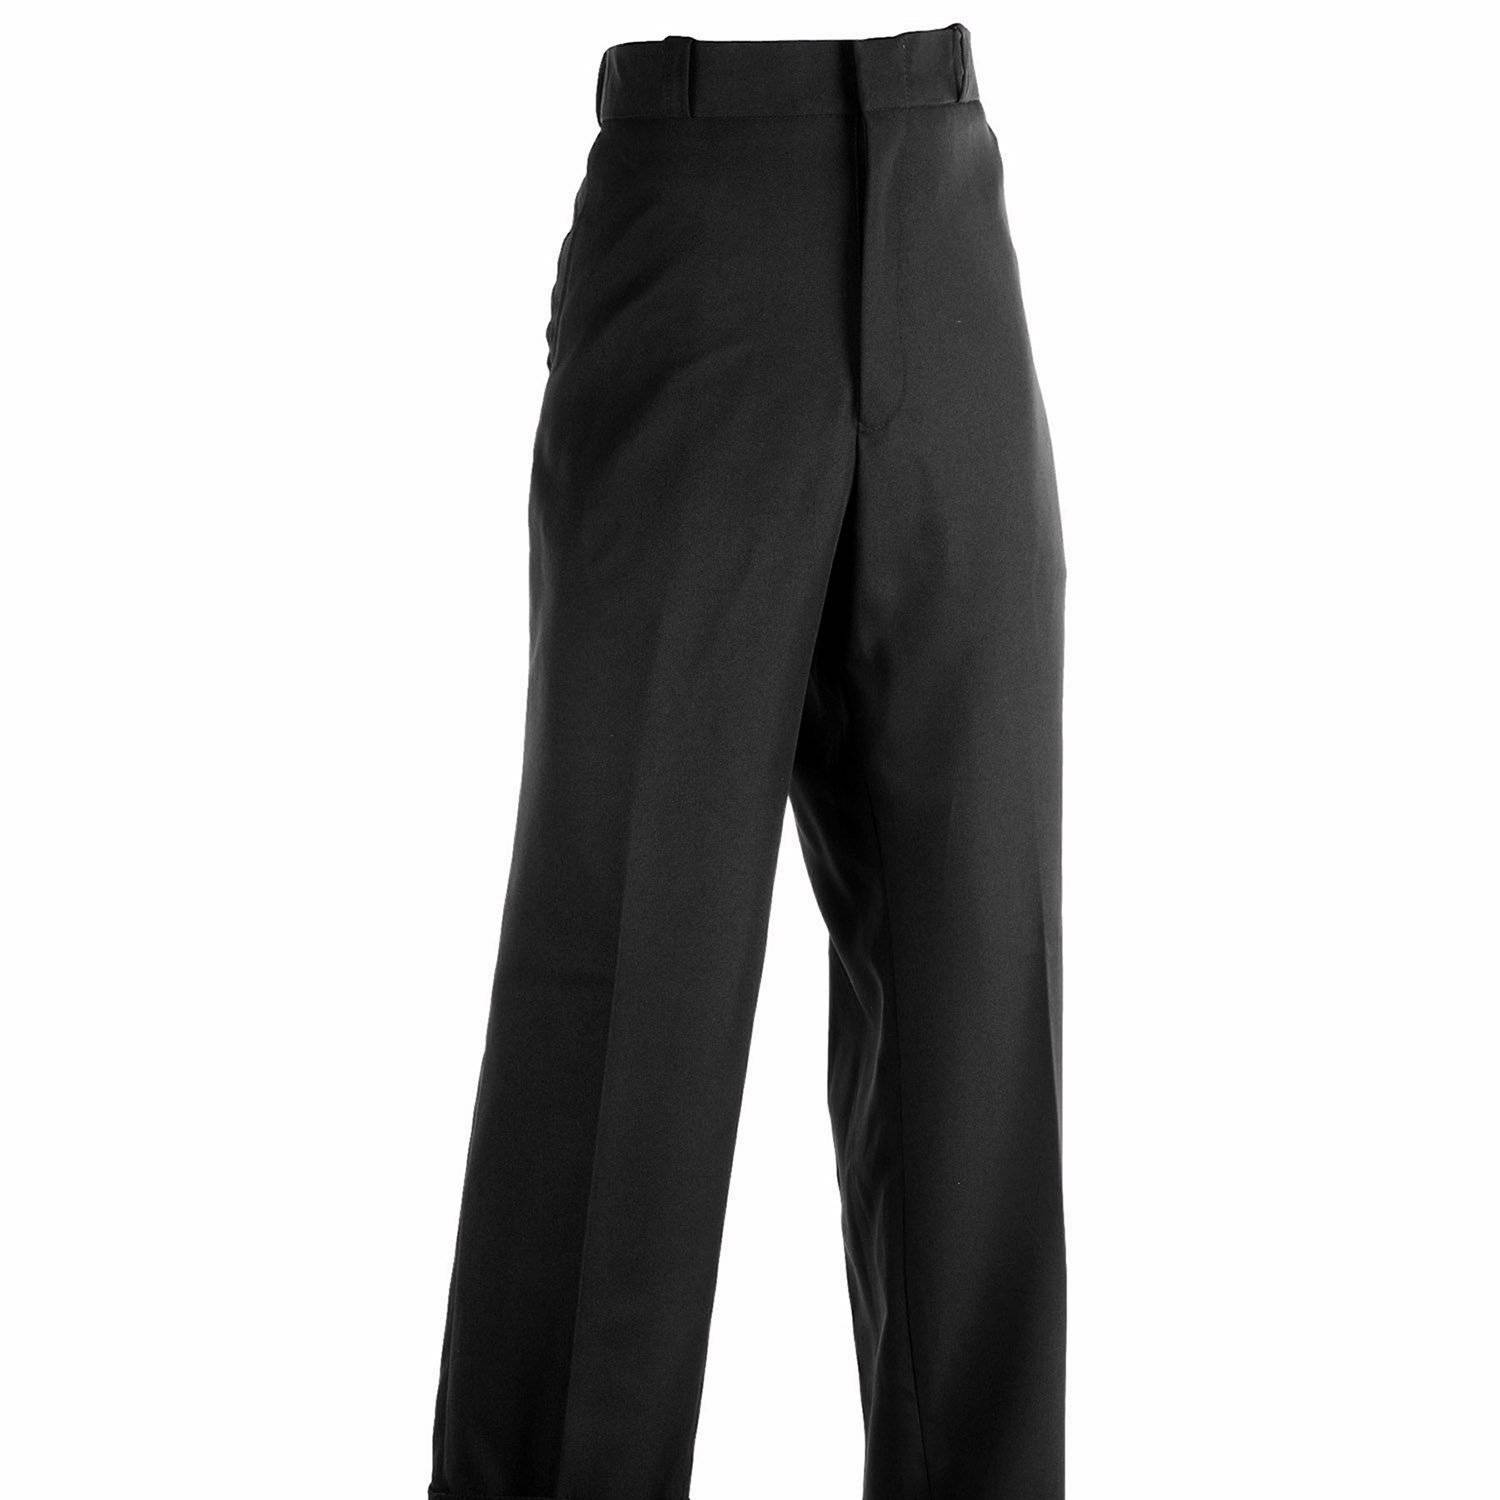 DutyPro Women's Polyester Pants.